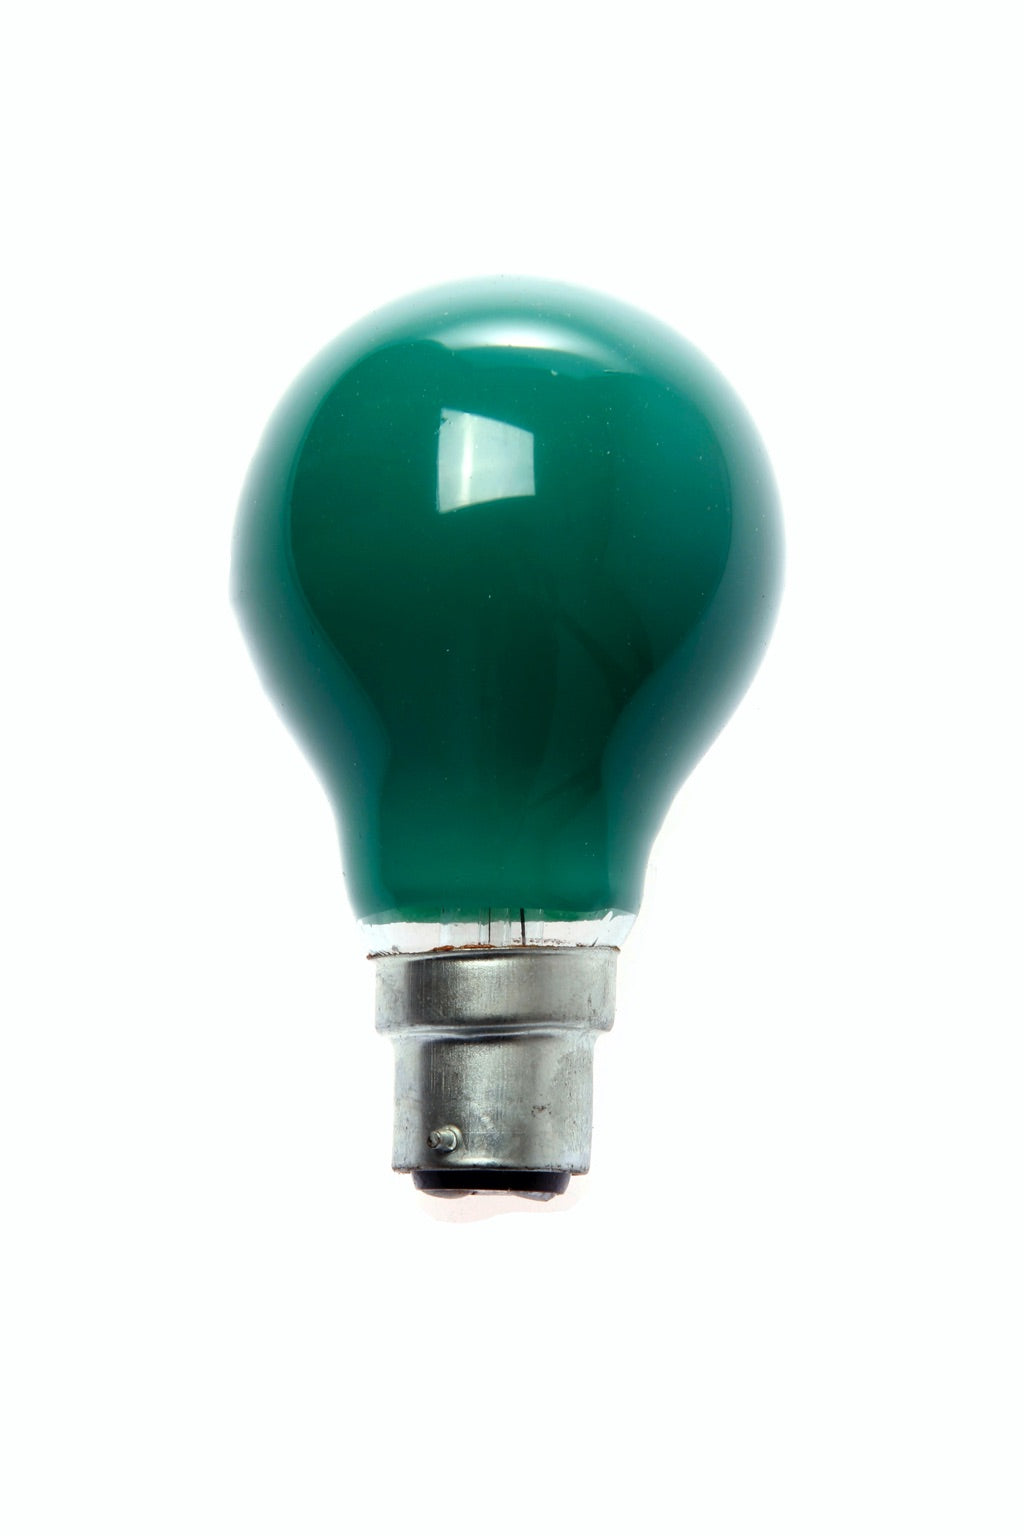 790336-LAMP COLORED B-22, 110-120V 20W GREEN